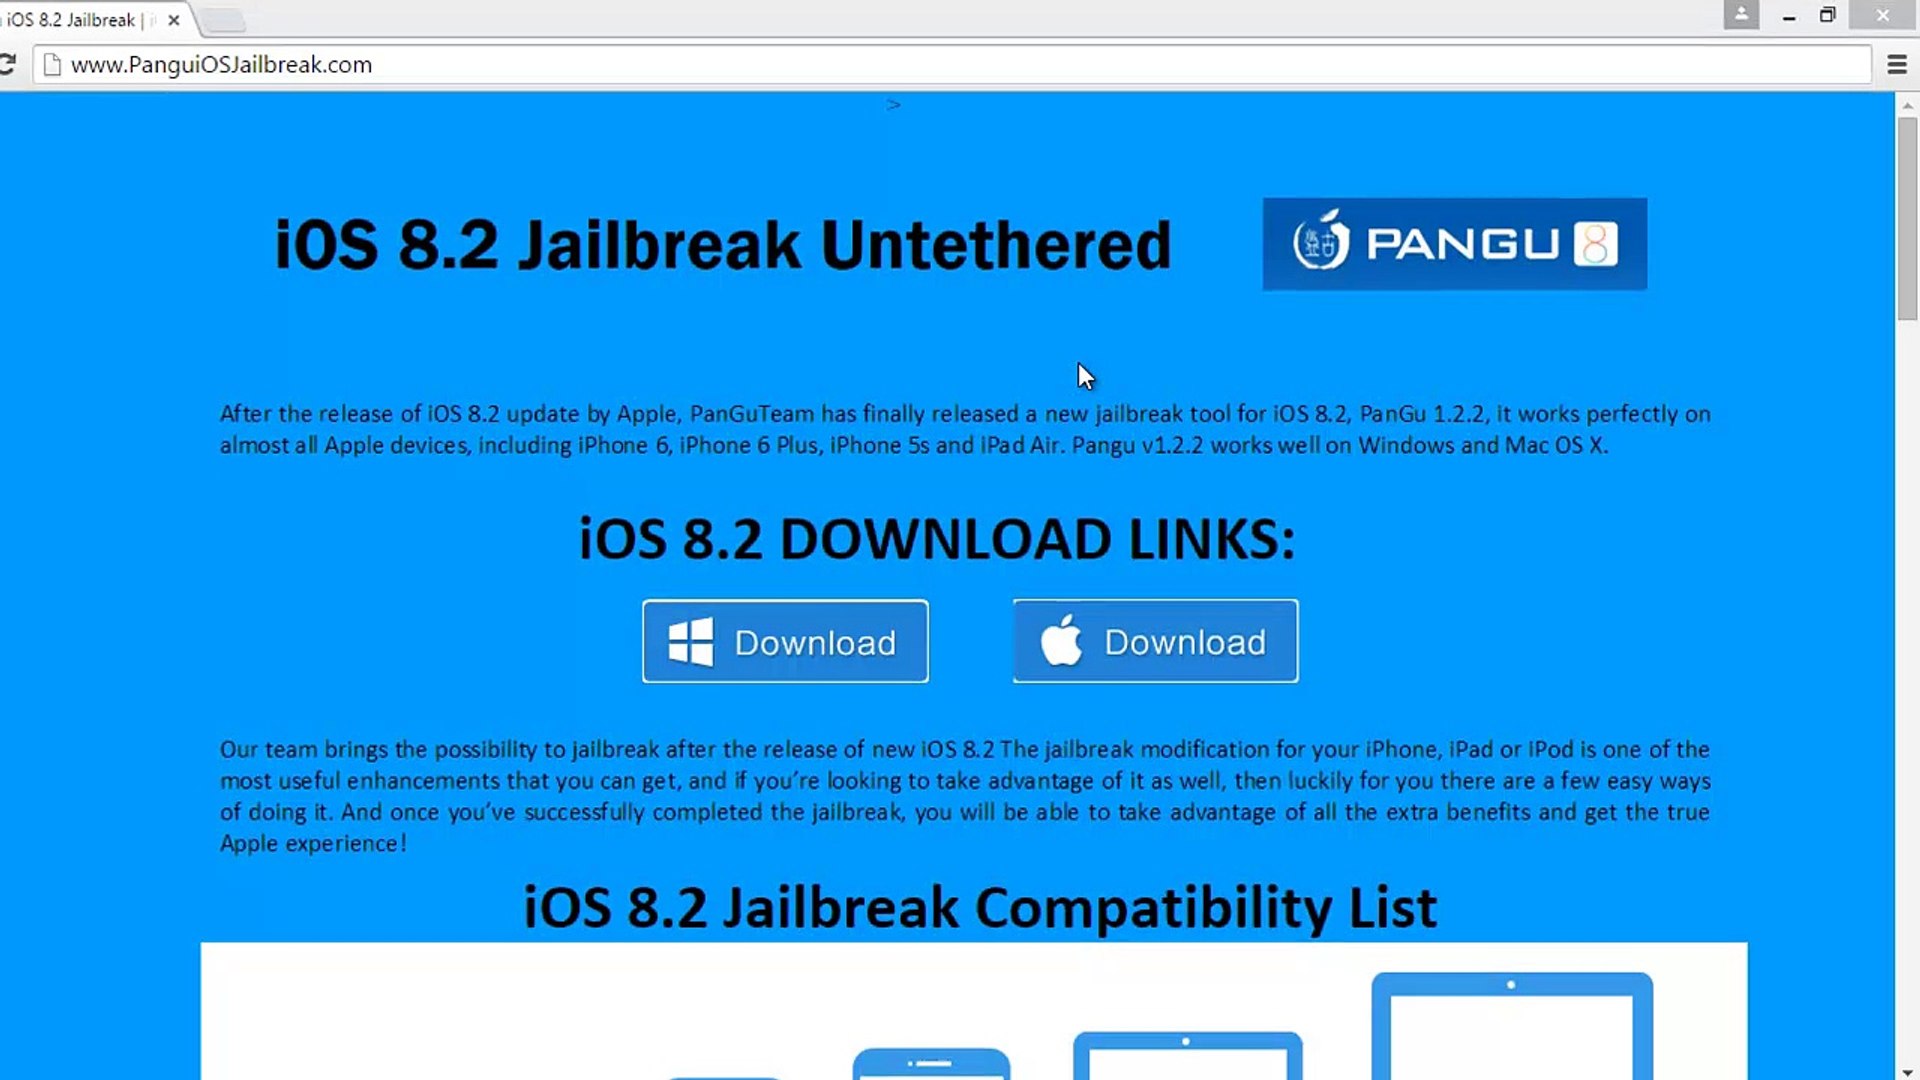 Download Pangu 9 Jailbreak Tool For Mac Os X